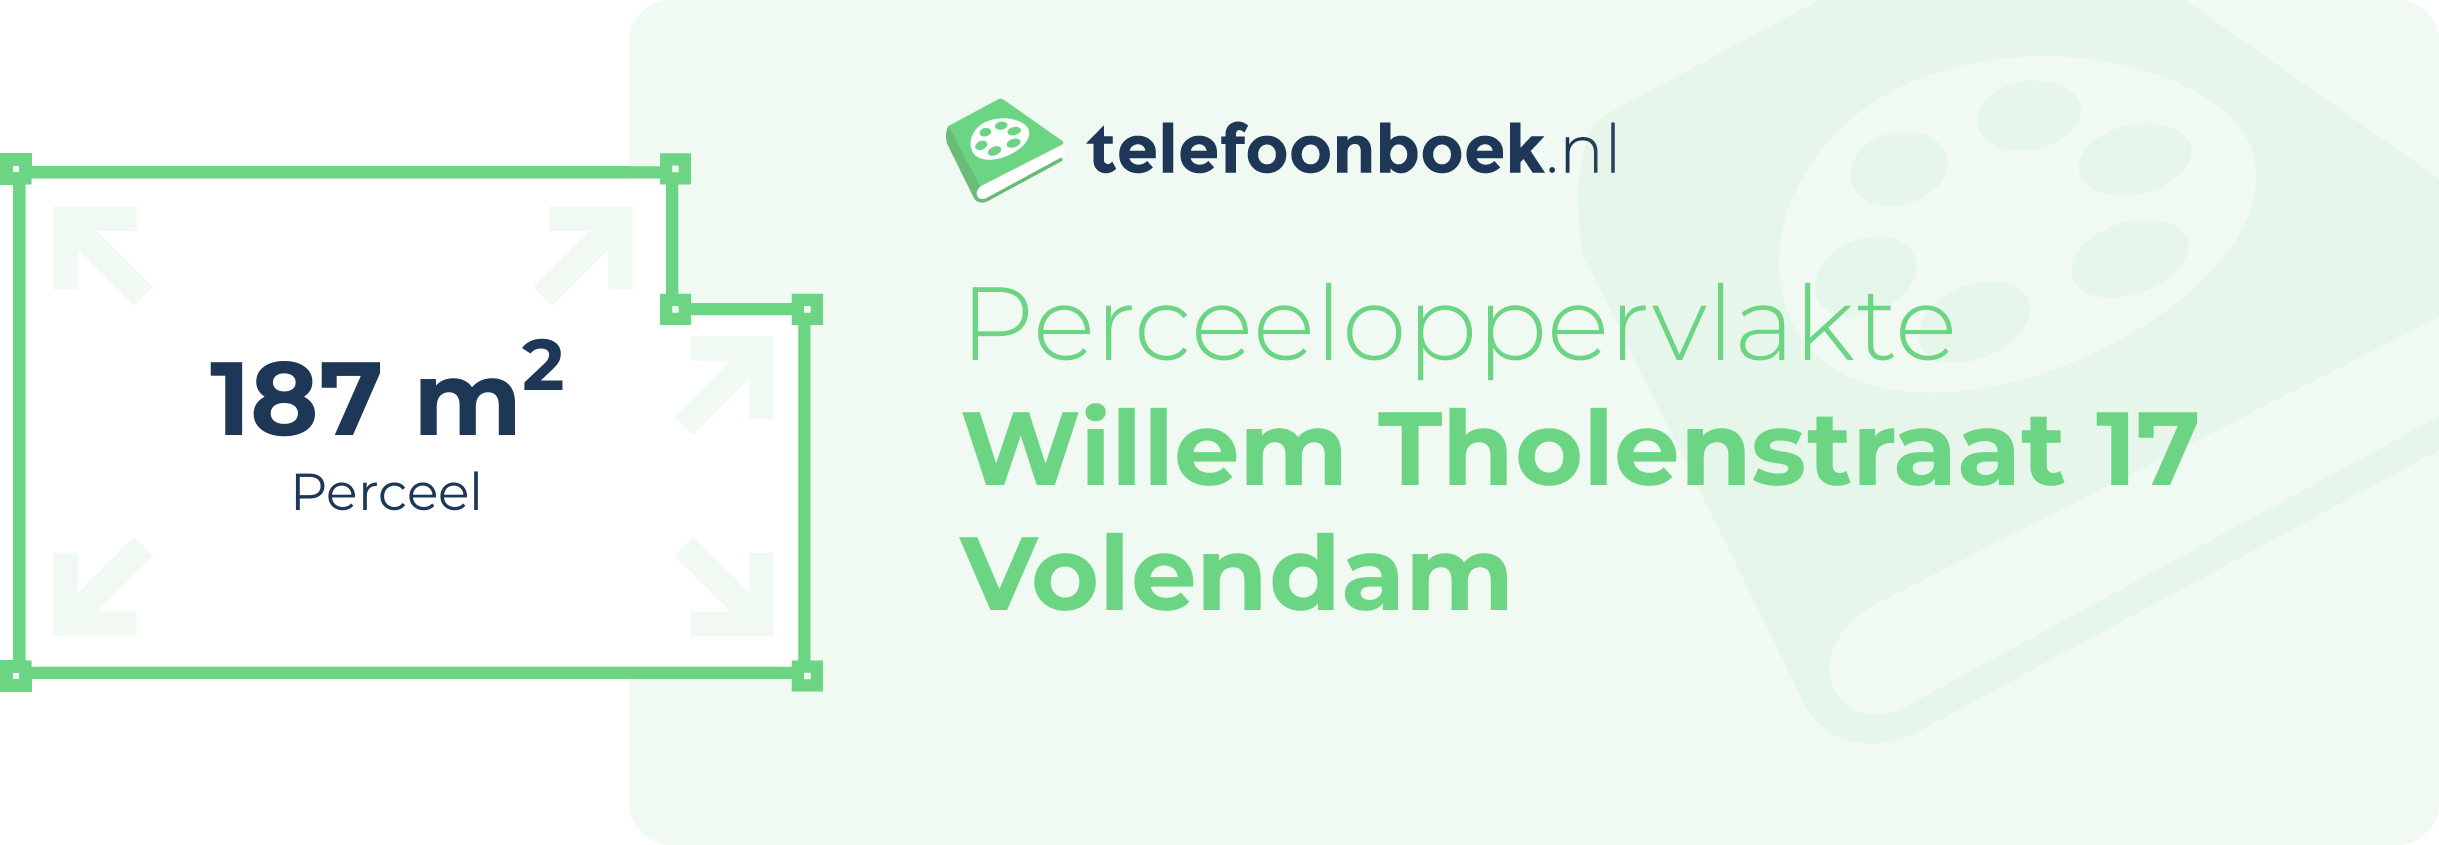 Perceeloppervlakte Willem Tholenstraat 17 Volendam